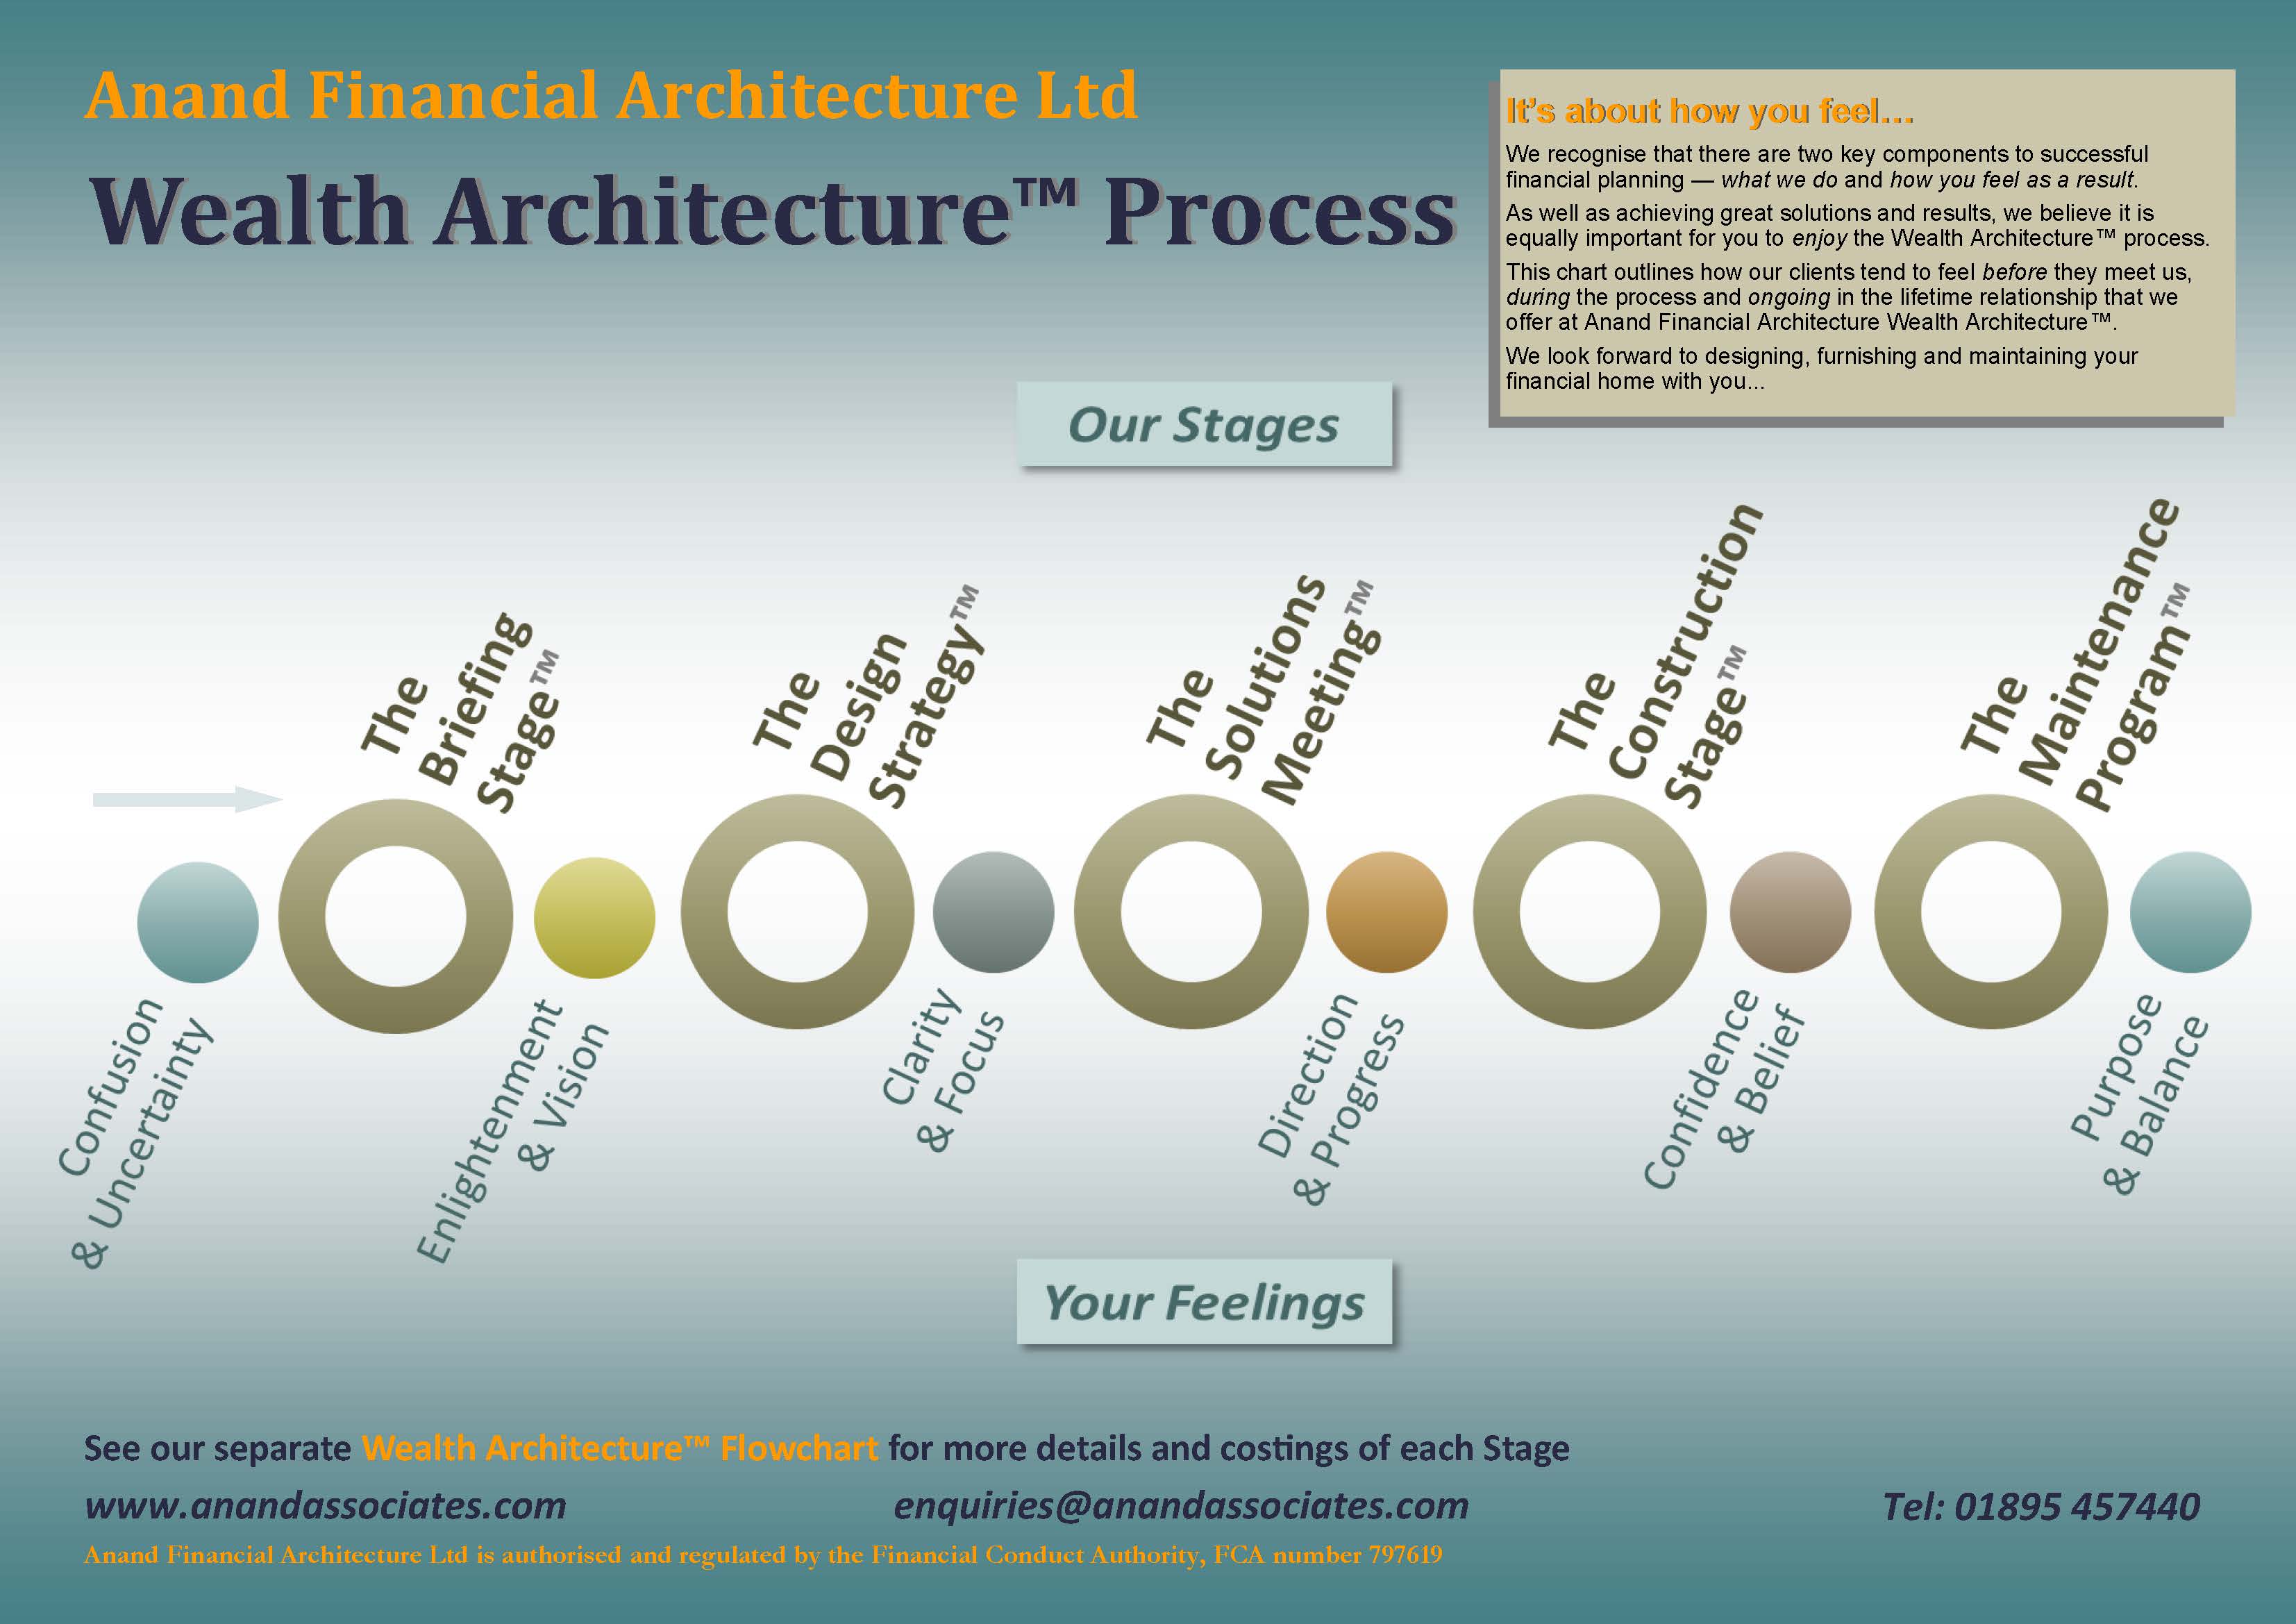 AFA Wealth Architecture Process 123